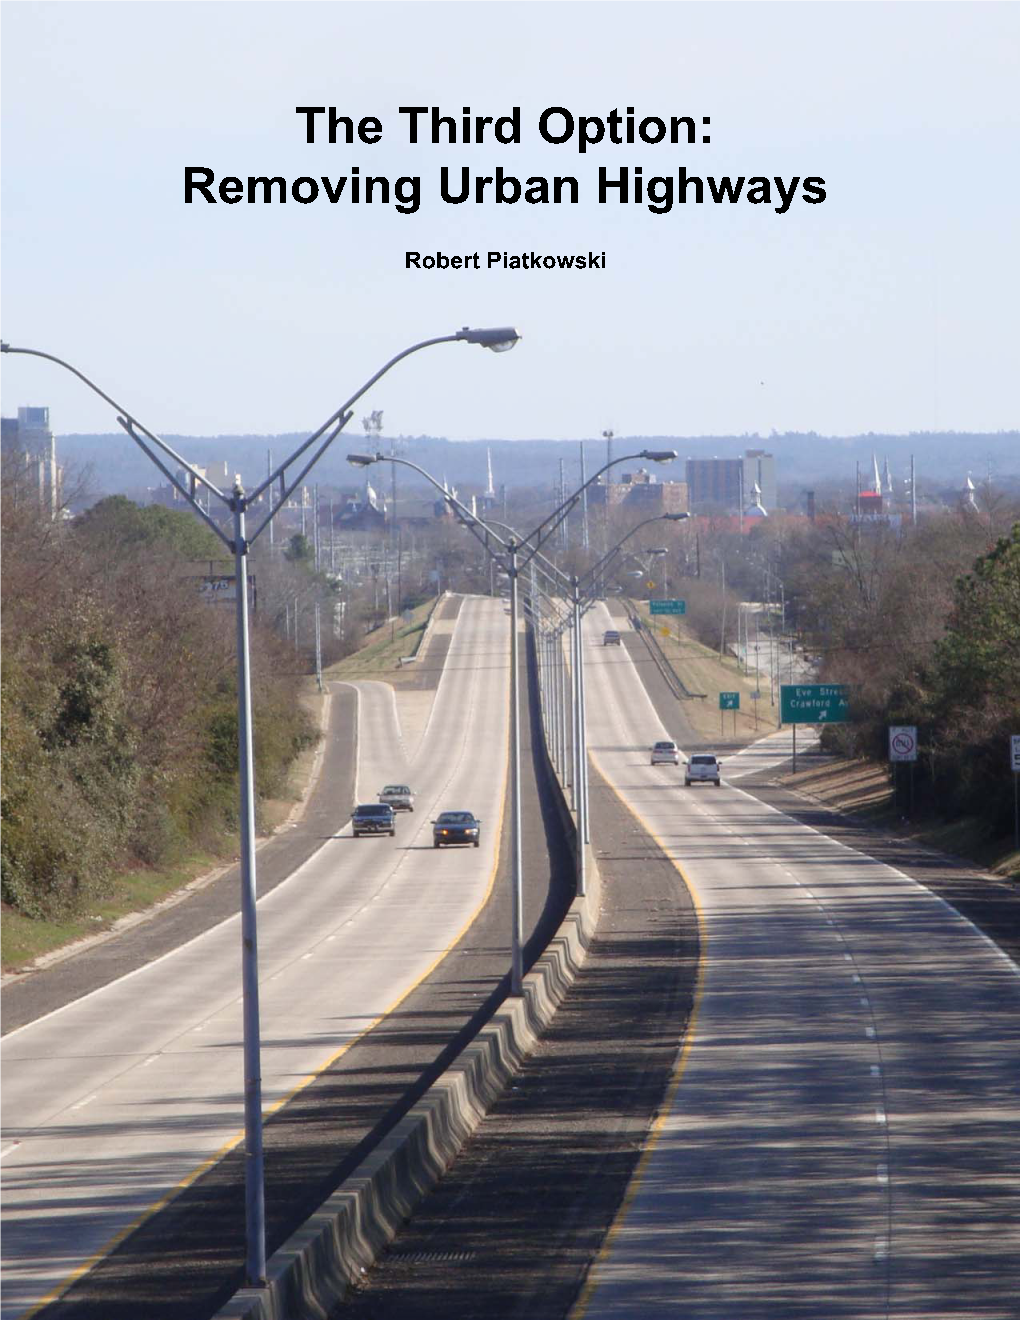 The Third Option: Removing Urban Highways